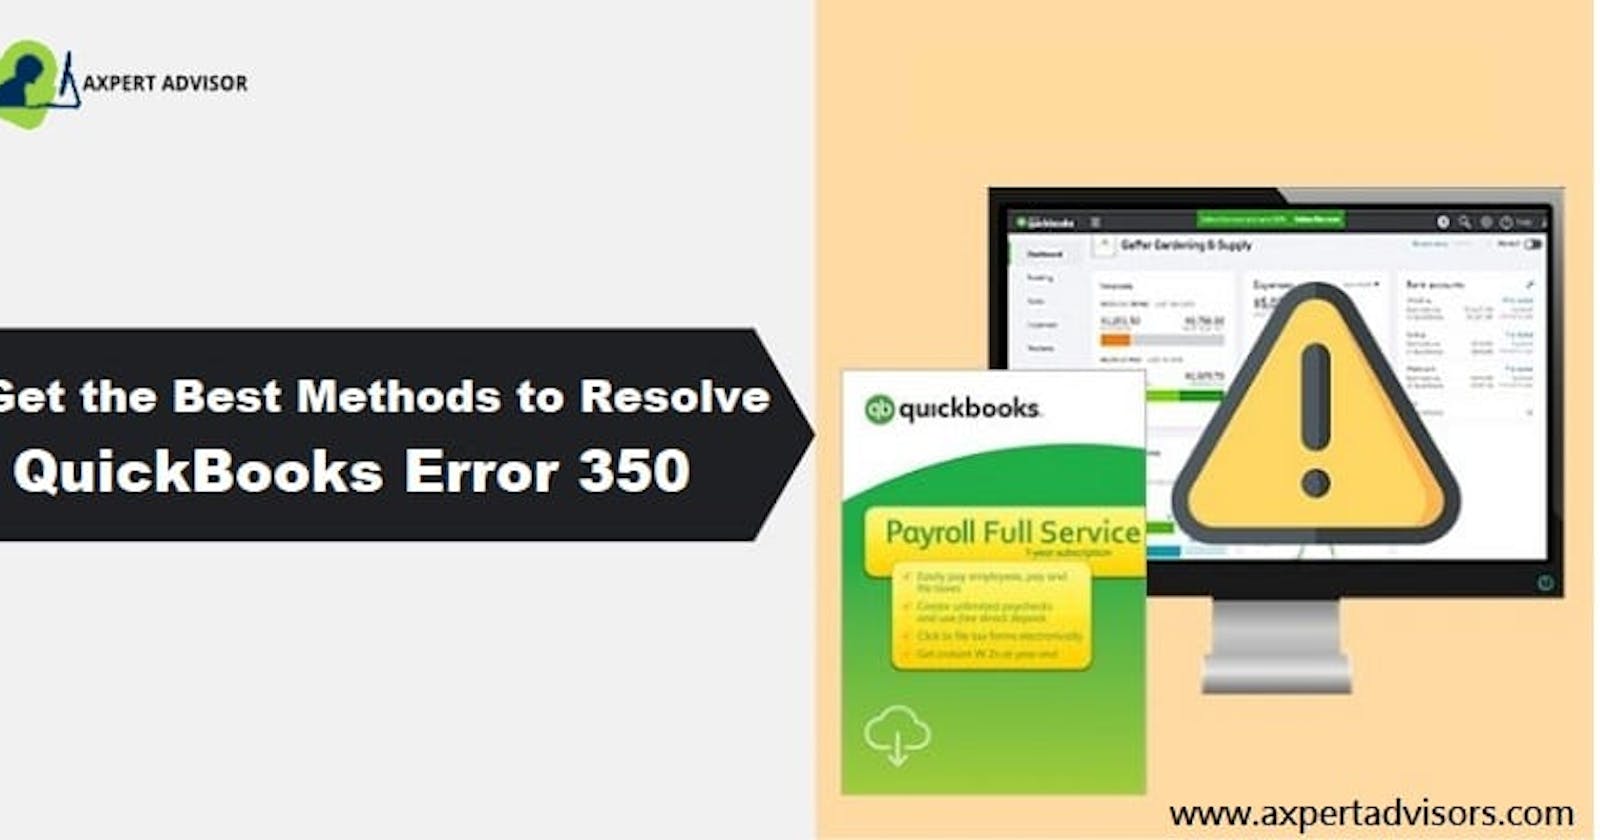 What are the Methods to Resolve QuickBooks Error 350?